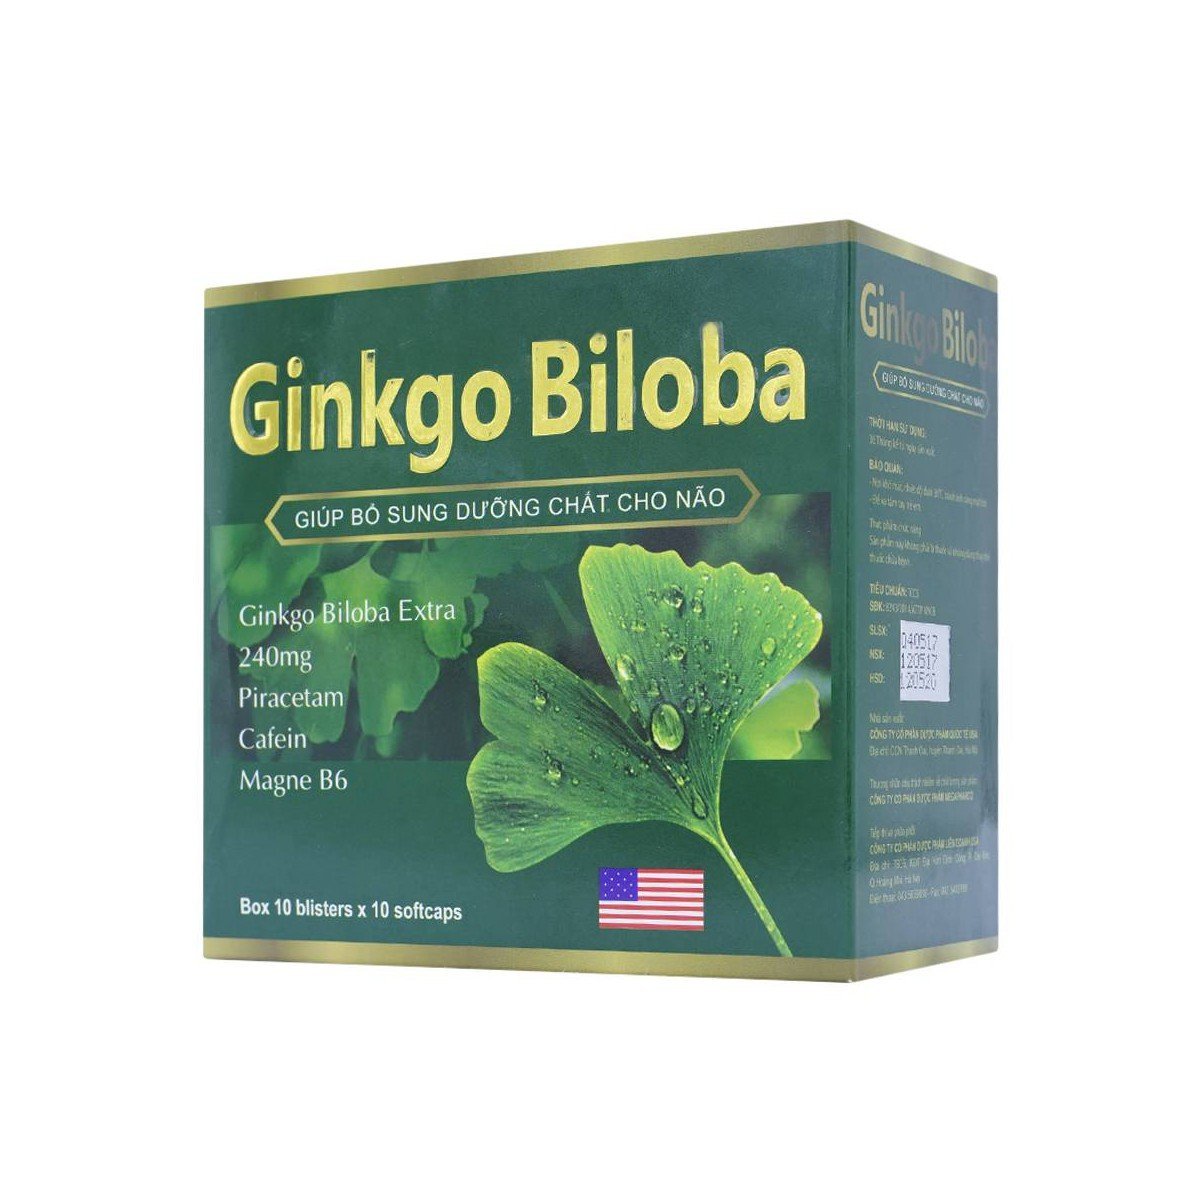 Benefits of Ginkgo Biloba Supplements